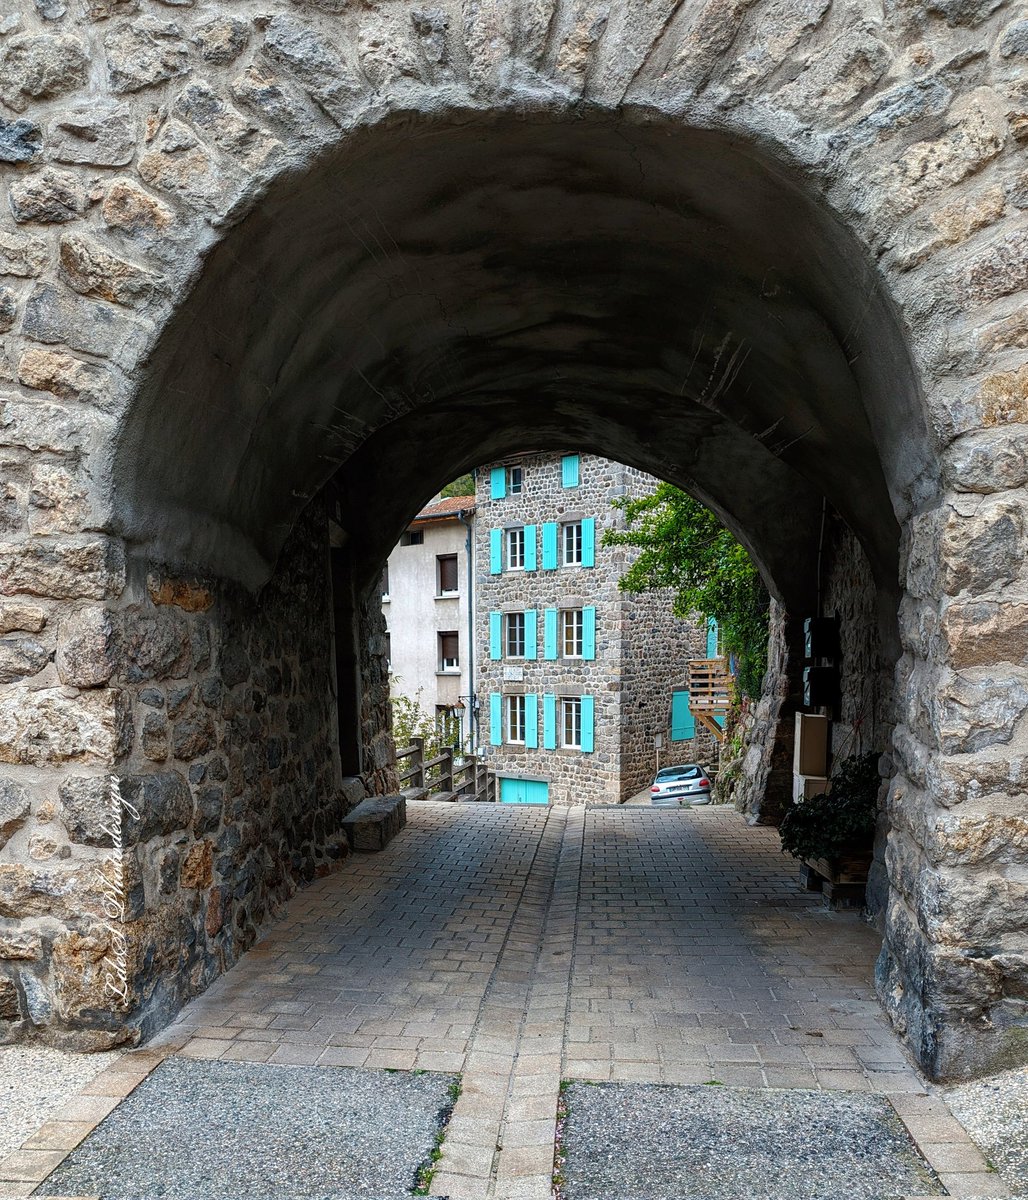 Beau coin de ville en Ardèche...
#WindowsOnWednesday
#ThePhotoHour 
#MagnifiqueFrance